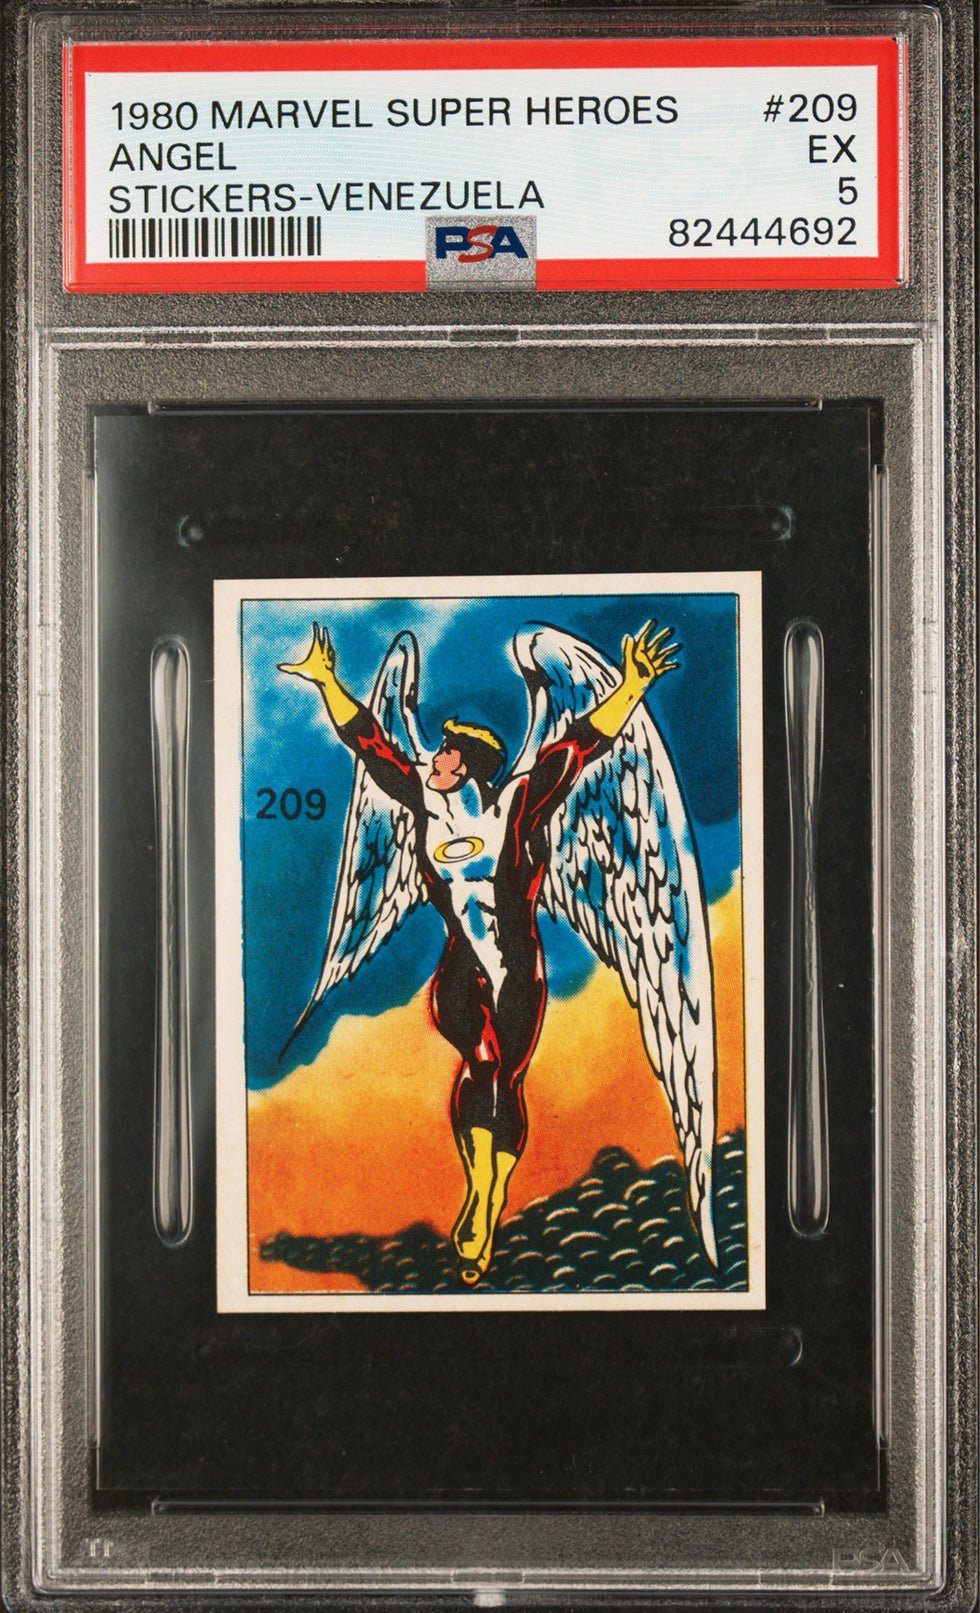 ANGEL PSA 5 1980 Marvel Super Heroes Sticker-Venezuela #209 Marvel Graded Cards Sticker - Hobby Gems